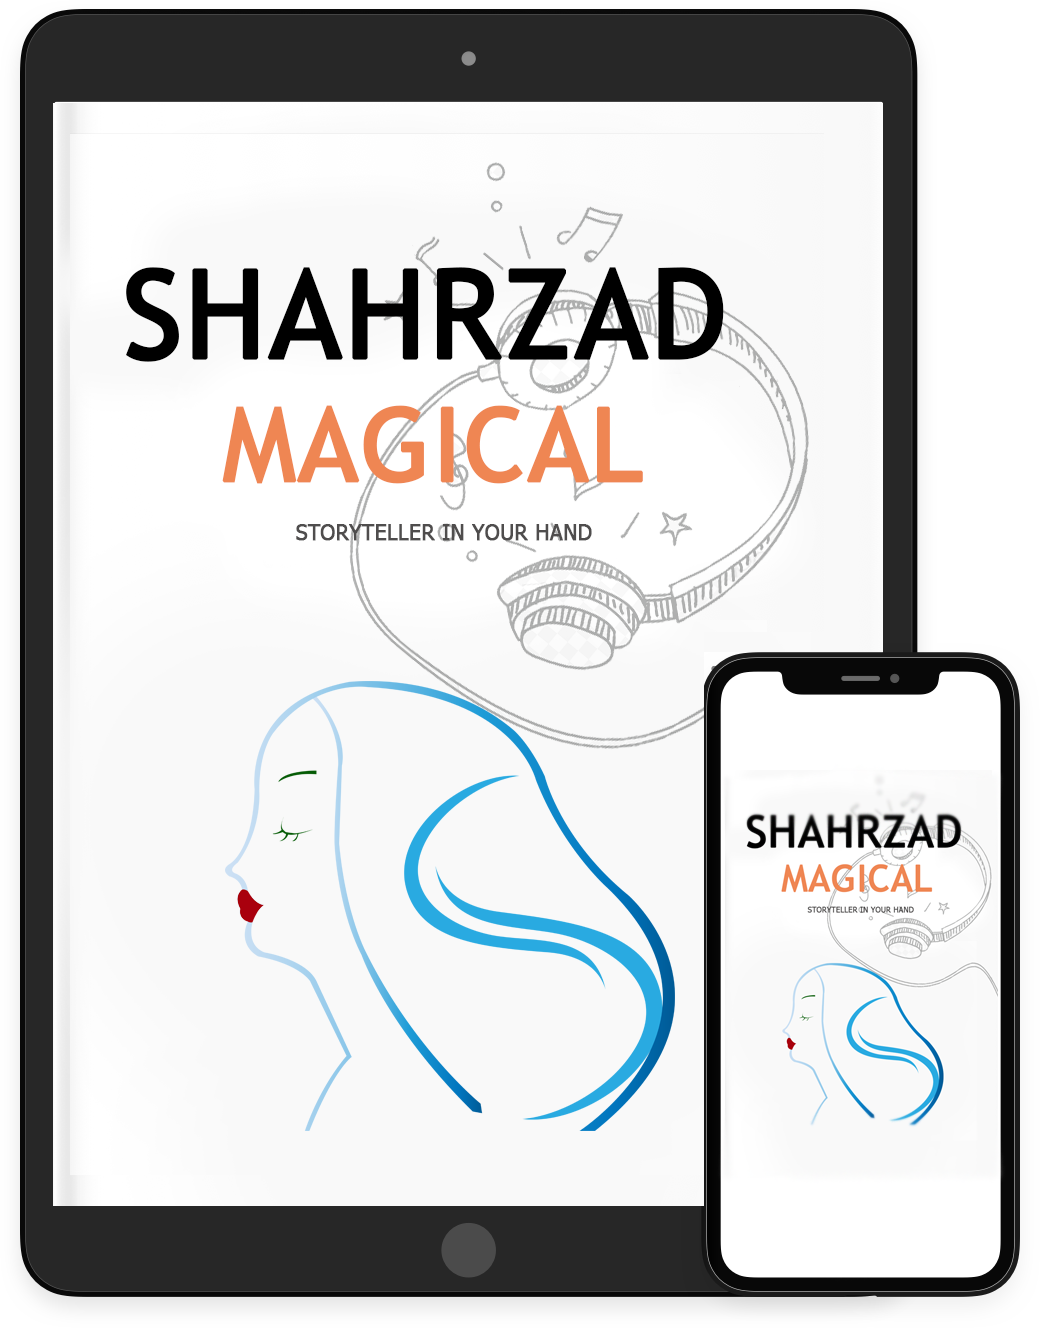 Shahrzad - The Storyteller